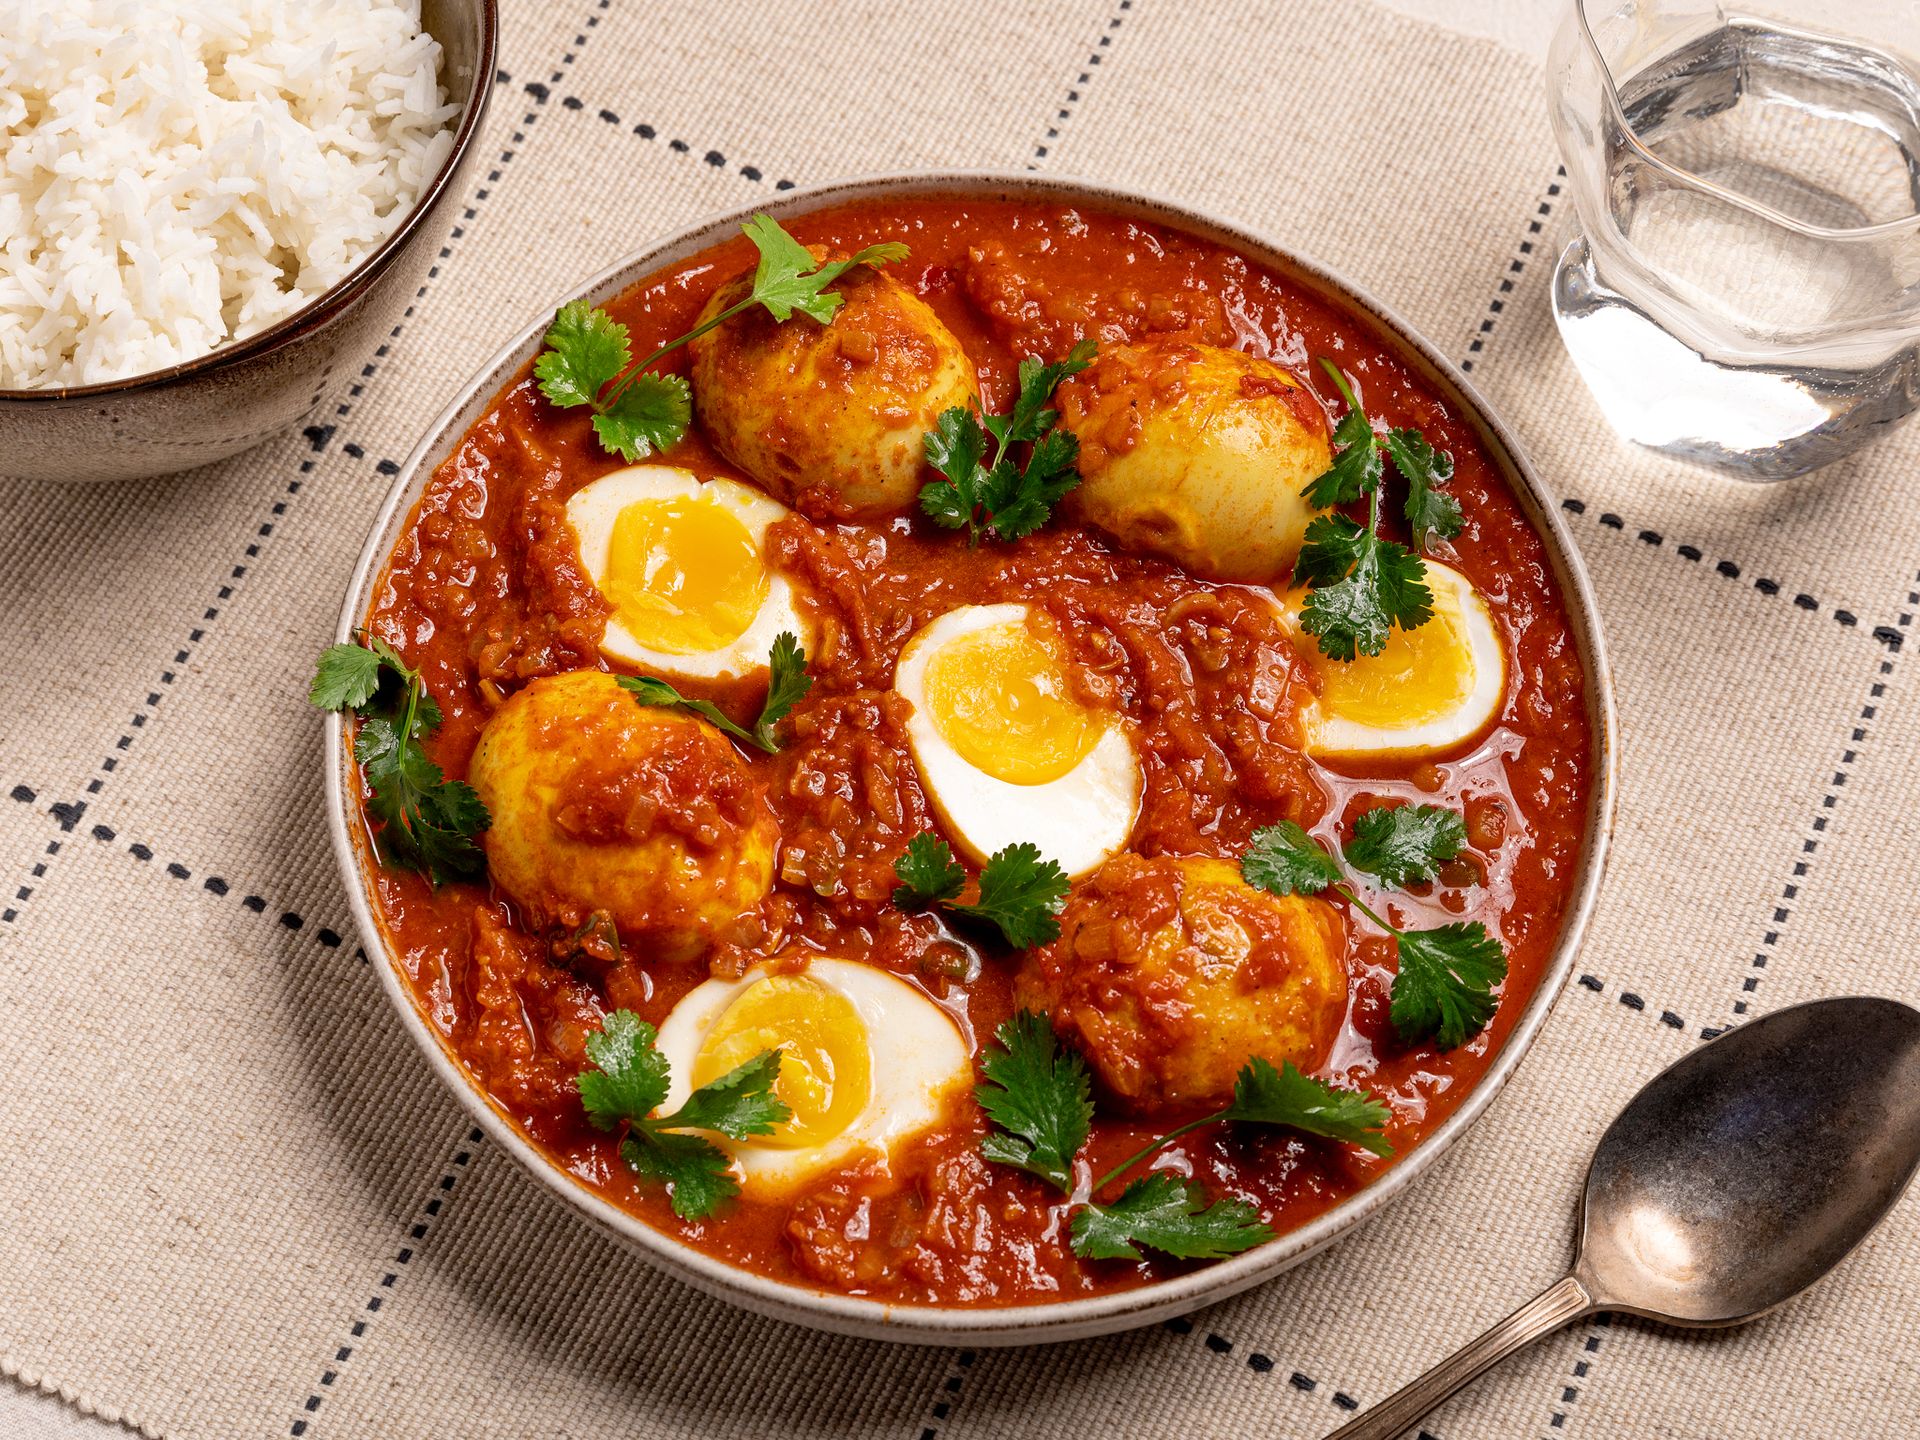 Würziges Eier-Curry nach indischer Art (Egg Masala) | Rezept | Kitchen ...